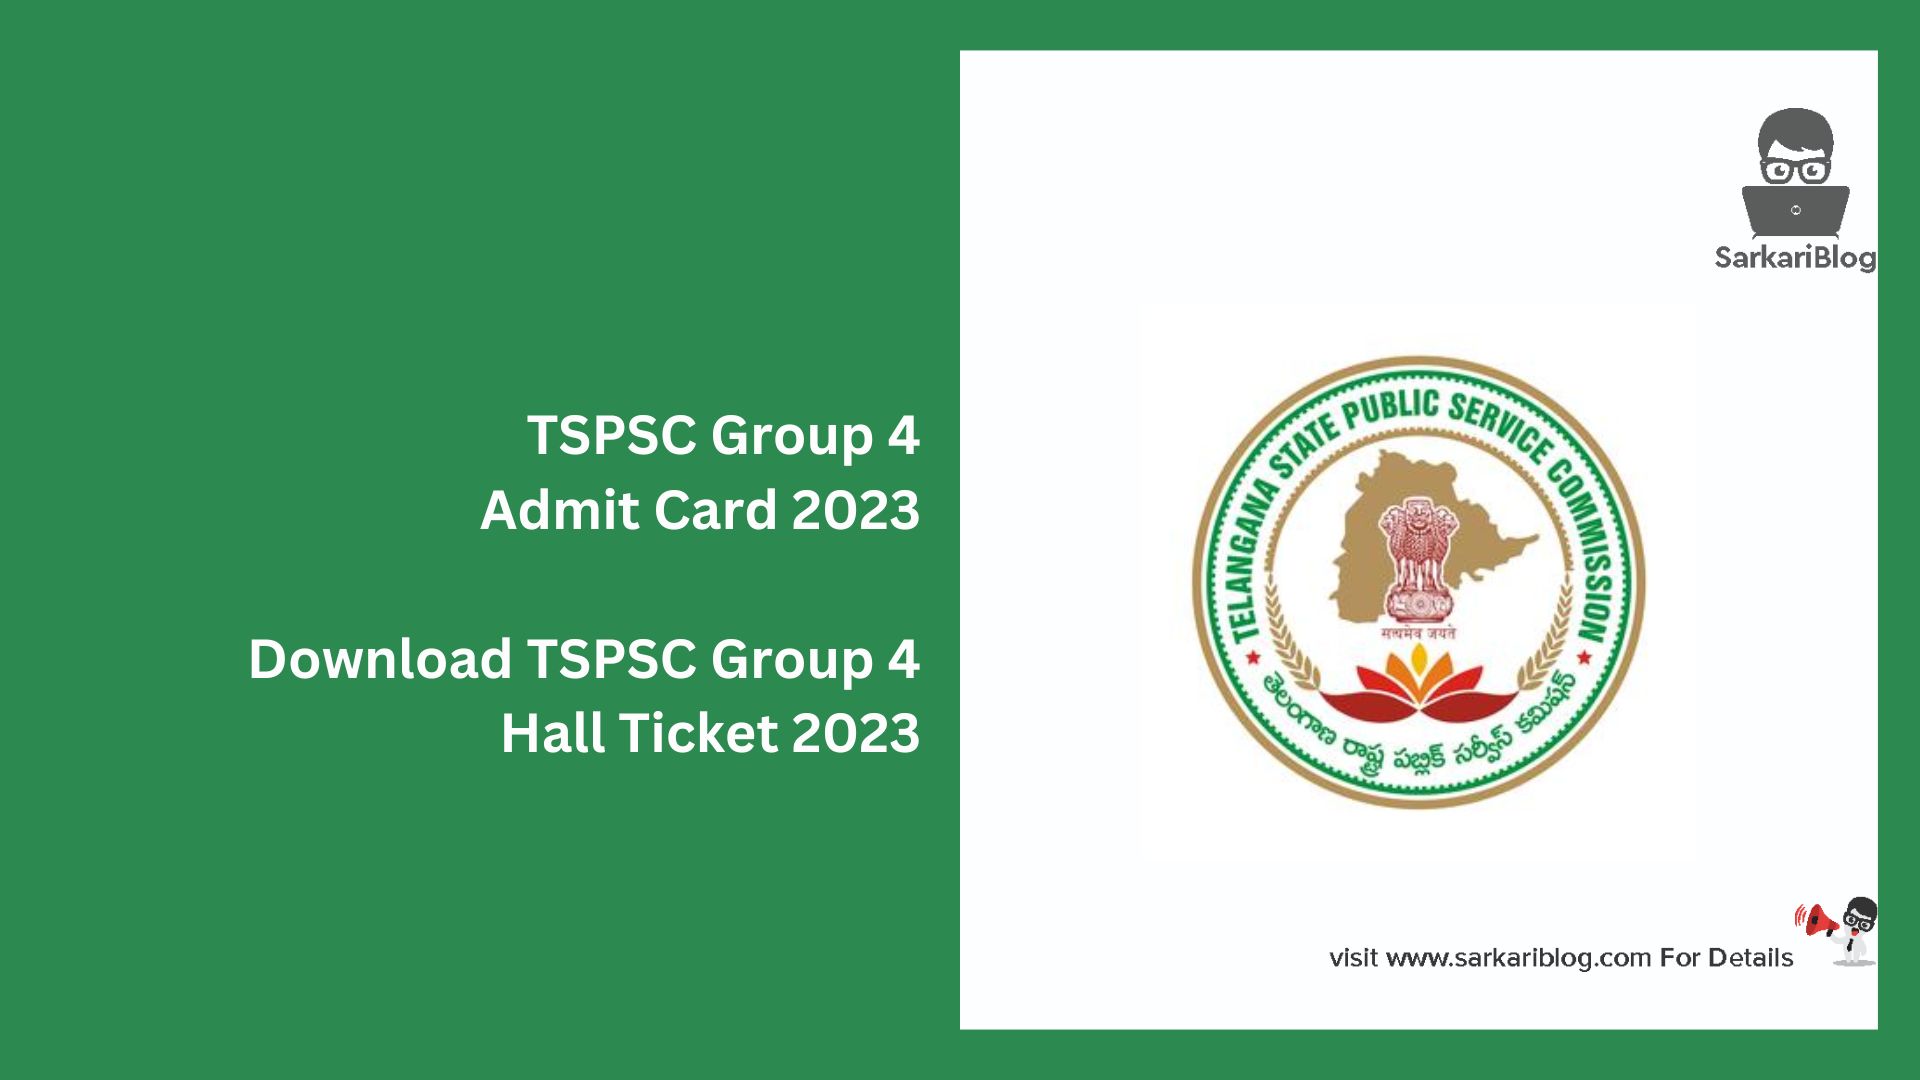 TSPSC Group 4 Admit Card 2023